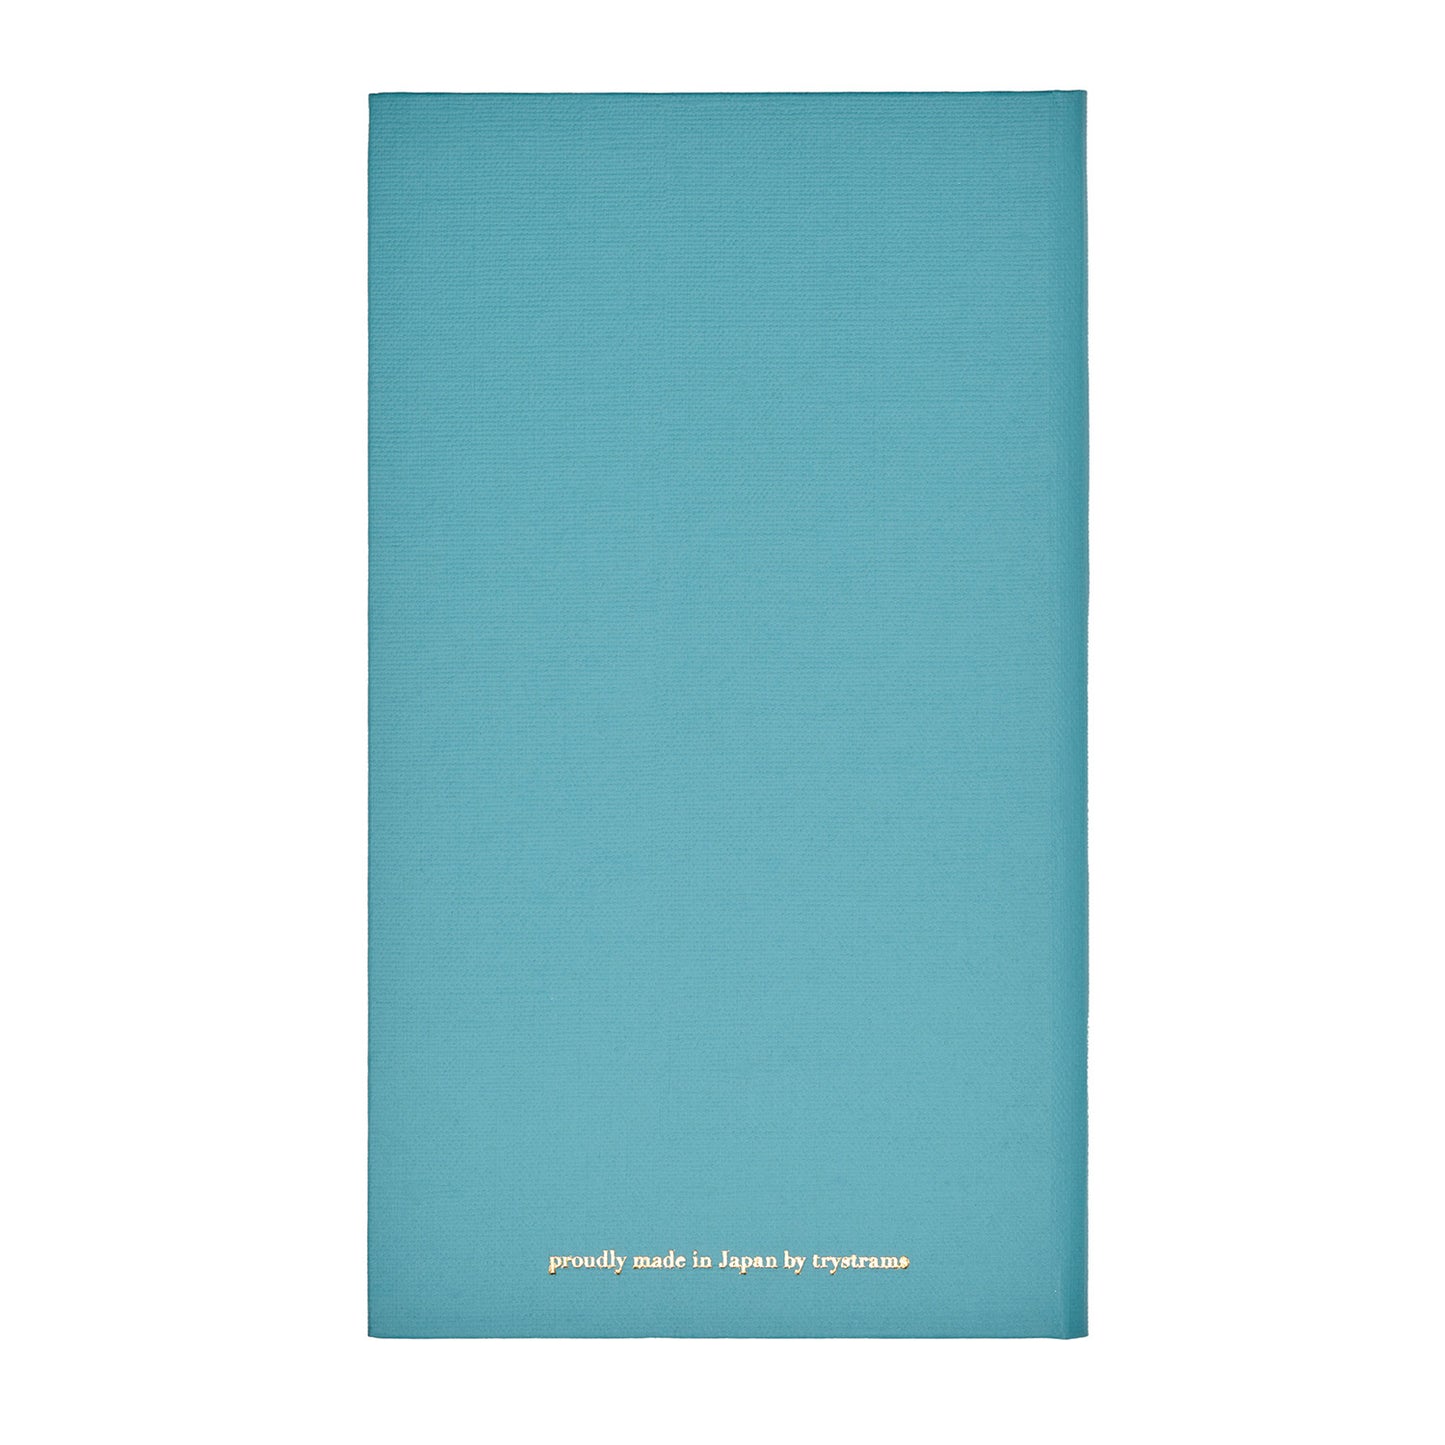 Kokuyo Field Sketch Book Notebook - 3 mm Grid - Blue back cover